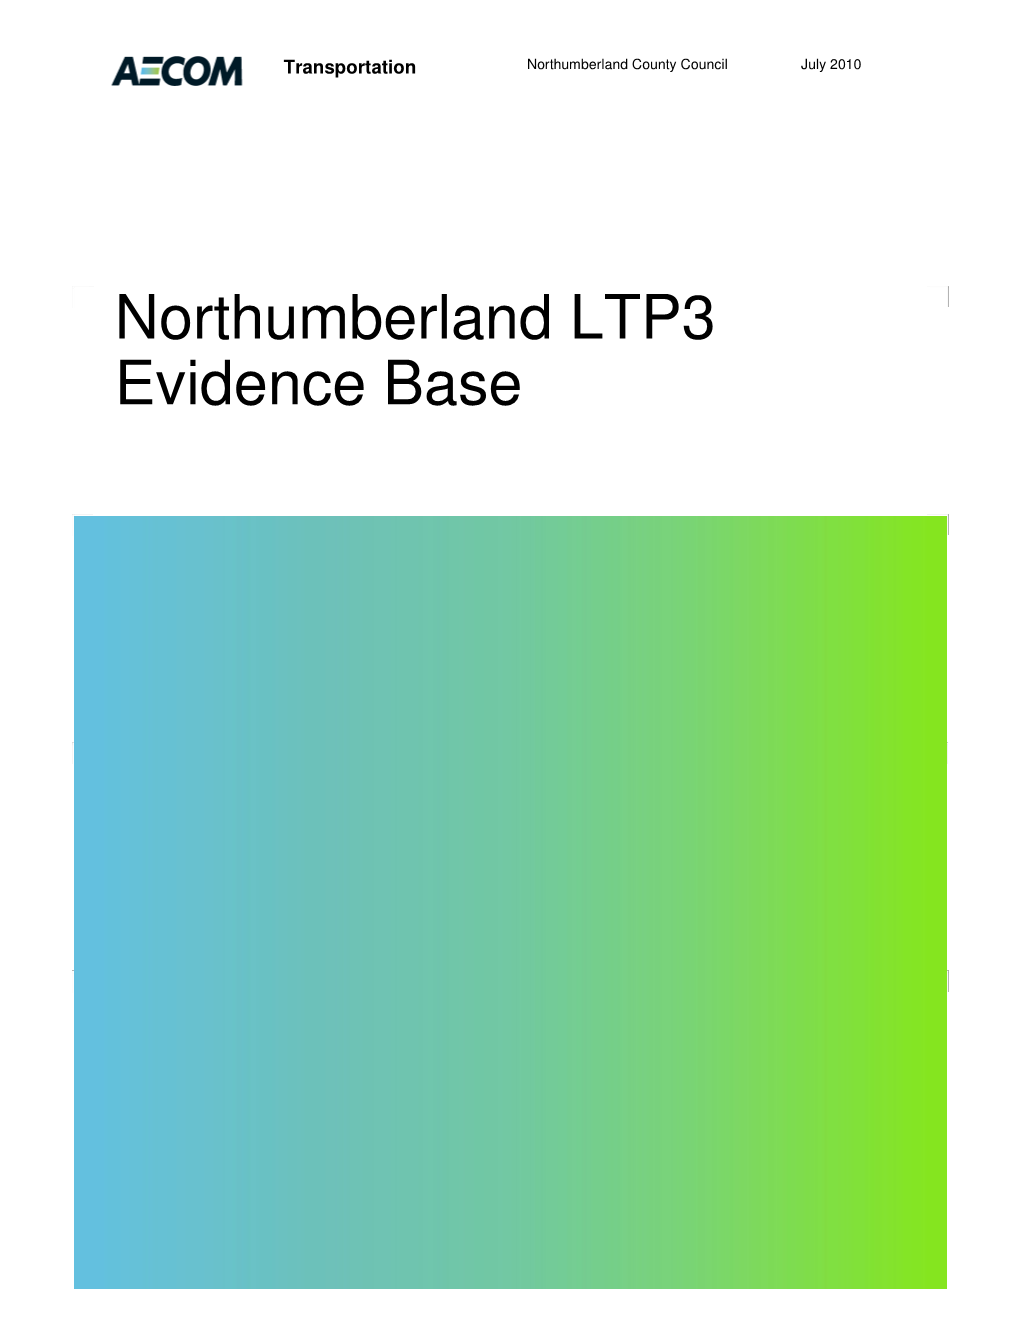 Northumberland LTP3 Evidence Base